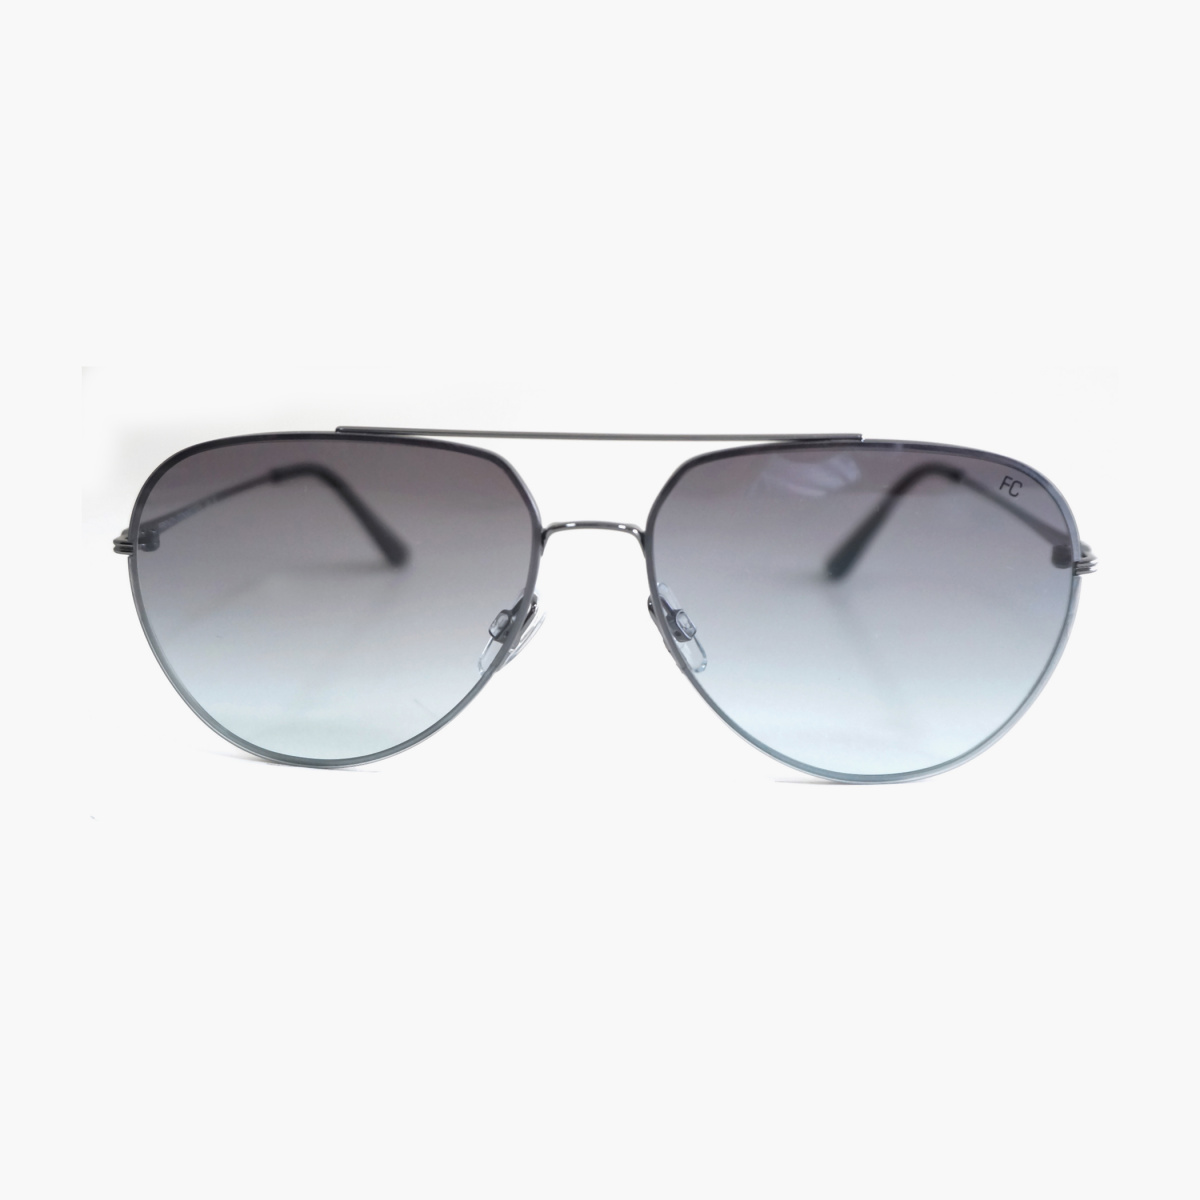 Tom Ford Eyewear Charles 02 Gradient Aviator Metal Sunglasses - Silver Blue  - ShopStyle